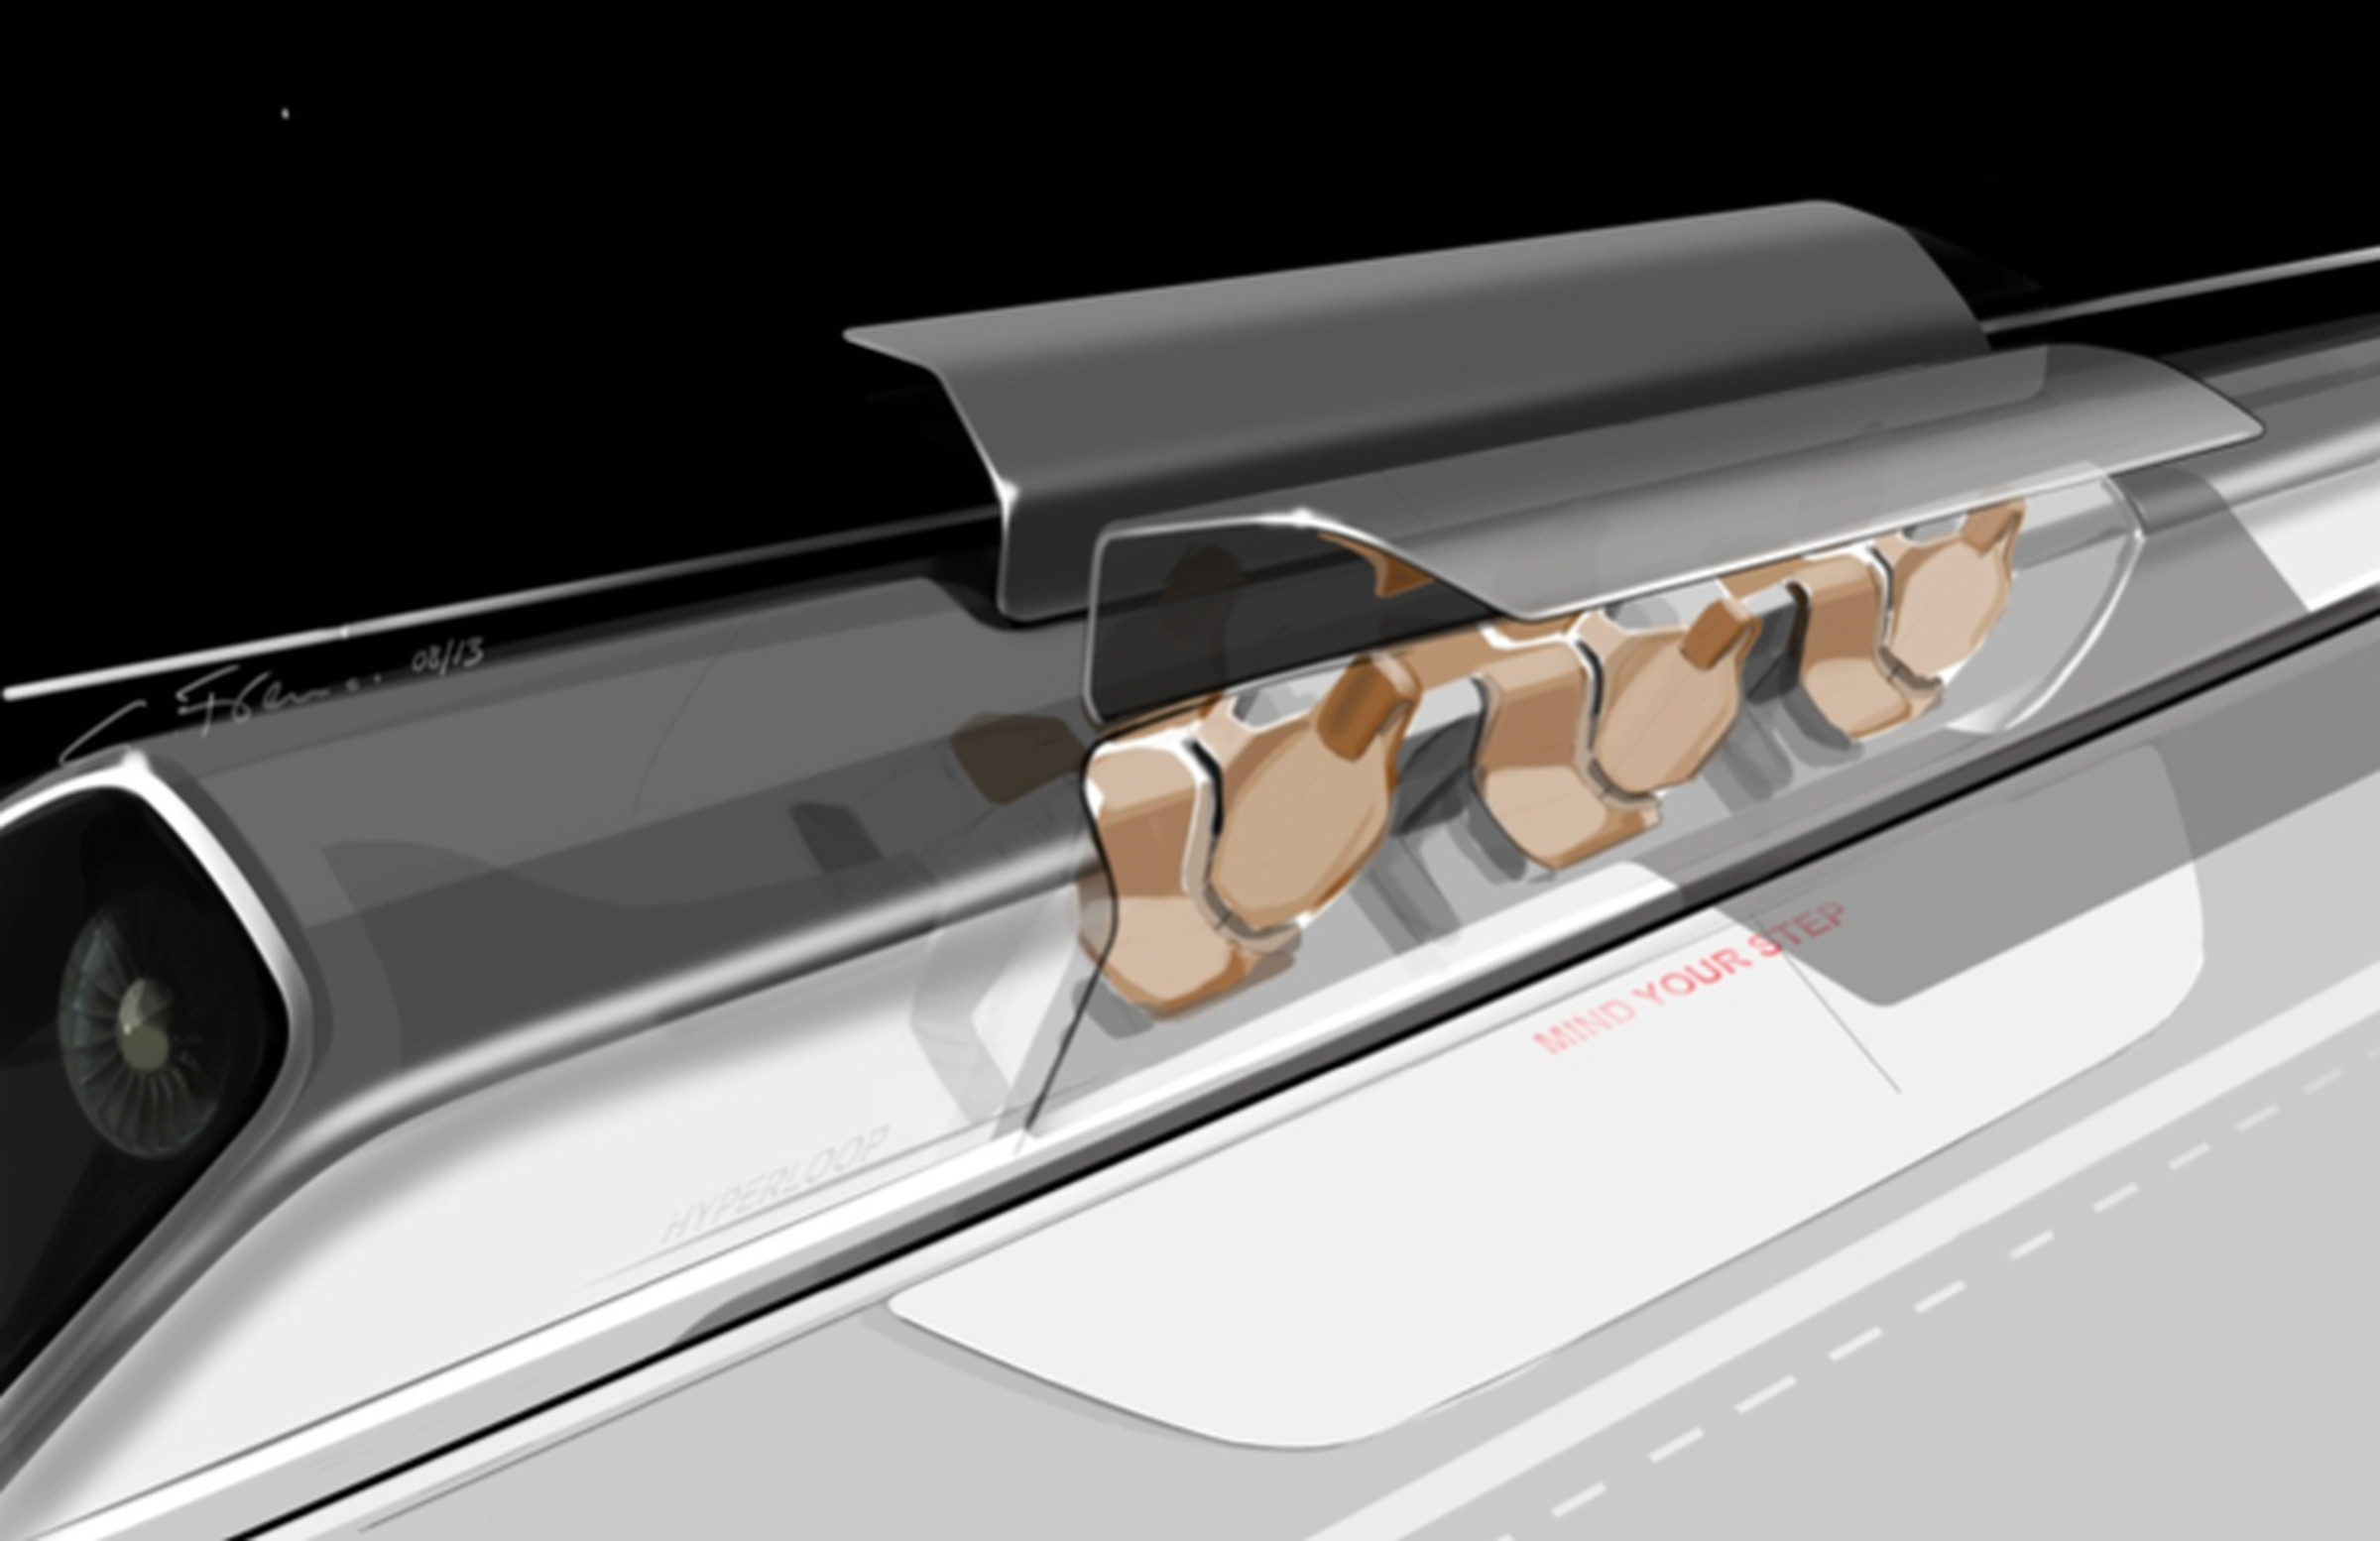 Elon Musk's Hyperloop design revealed